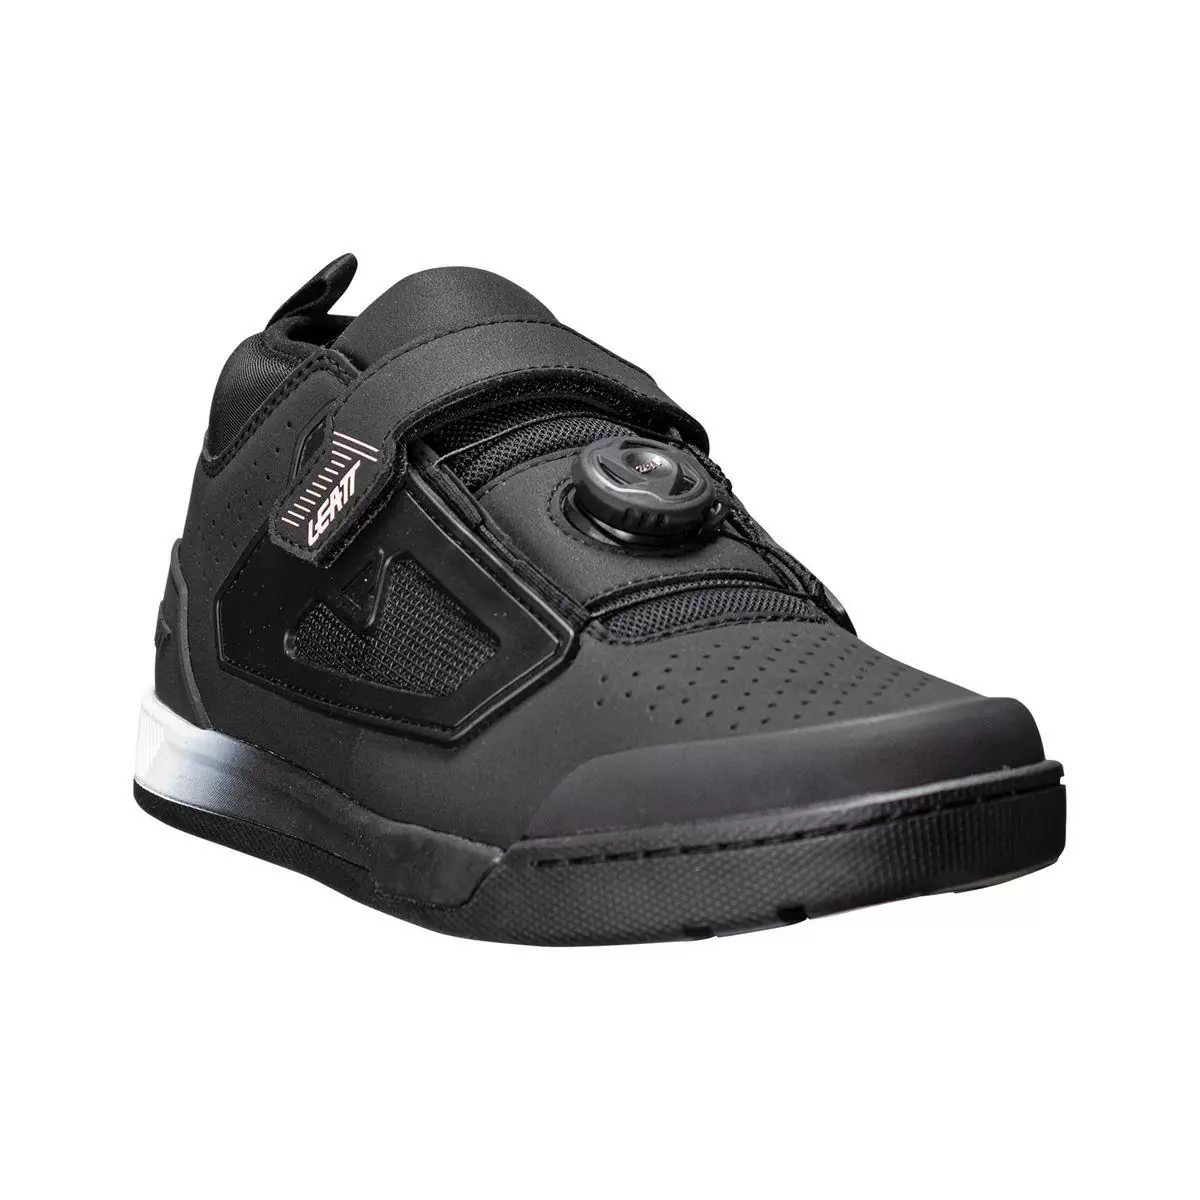 Chaussures VTT Pro Flat 3.0 noir taille 41.5 - image